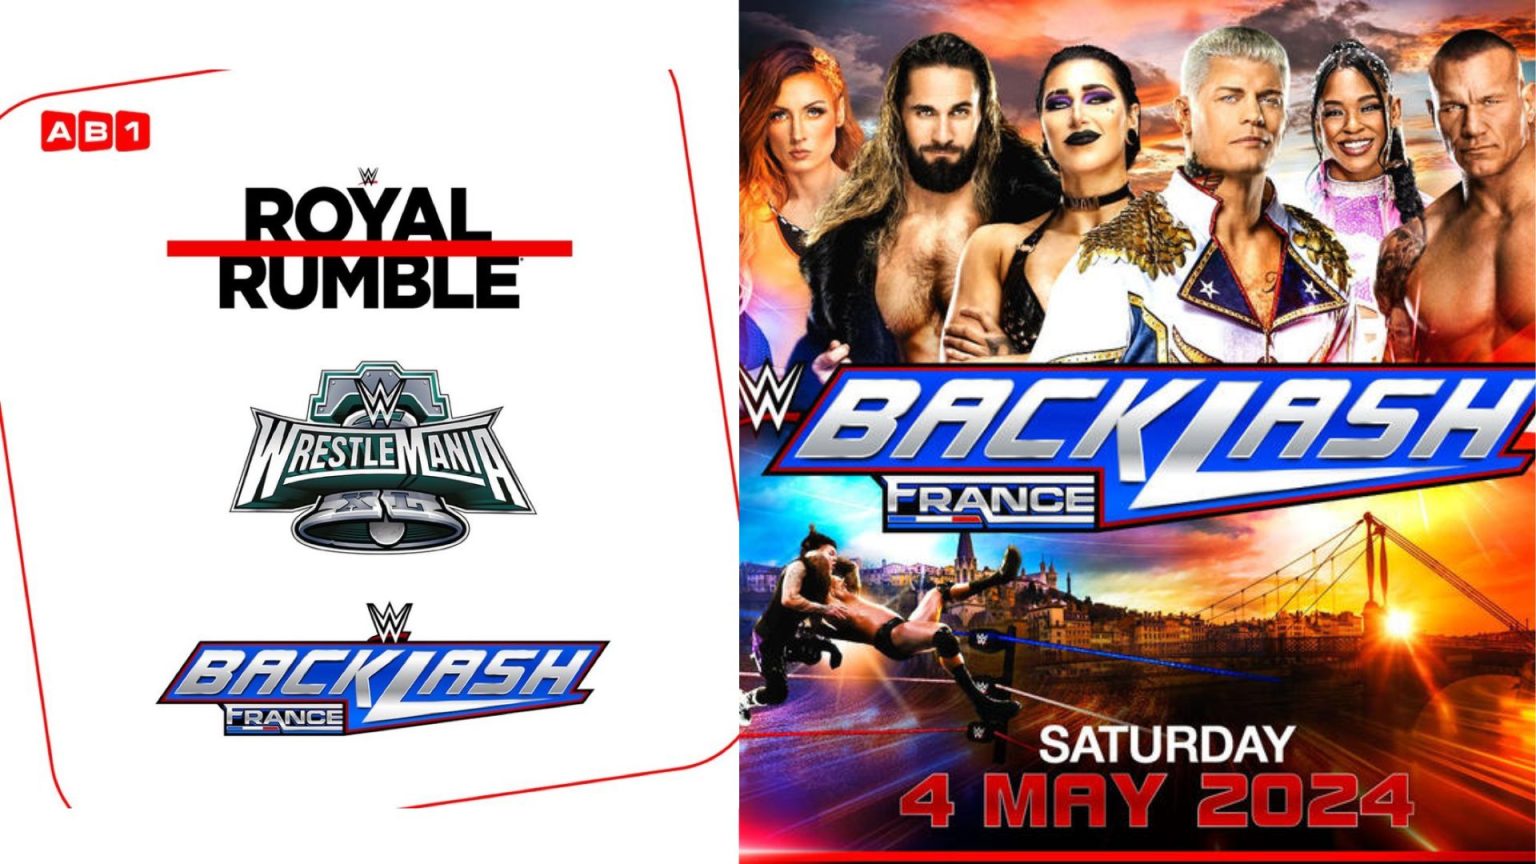 WWE Royal Rumble 2024, WrestleMania 40 et Backlash France seront